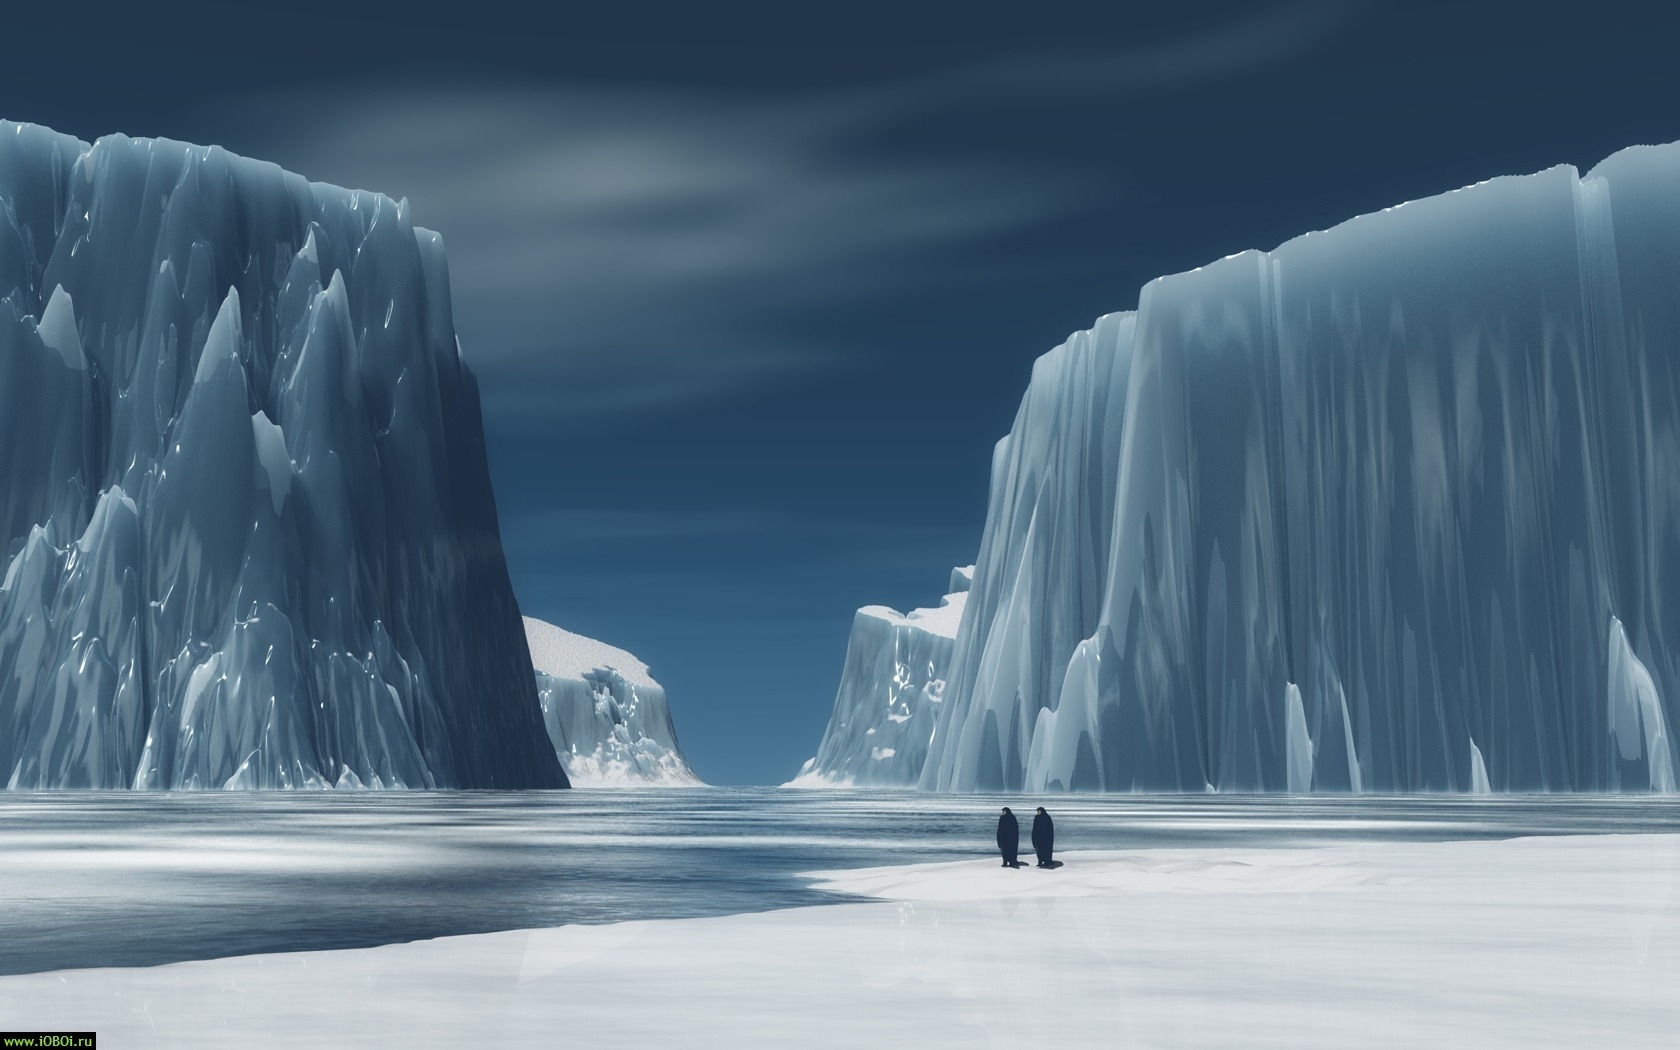 Скачать обои Антарктида Арктика на телефон бесплатно